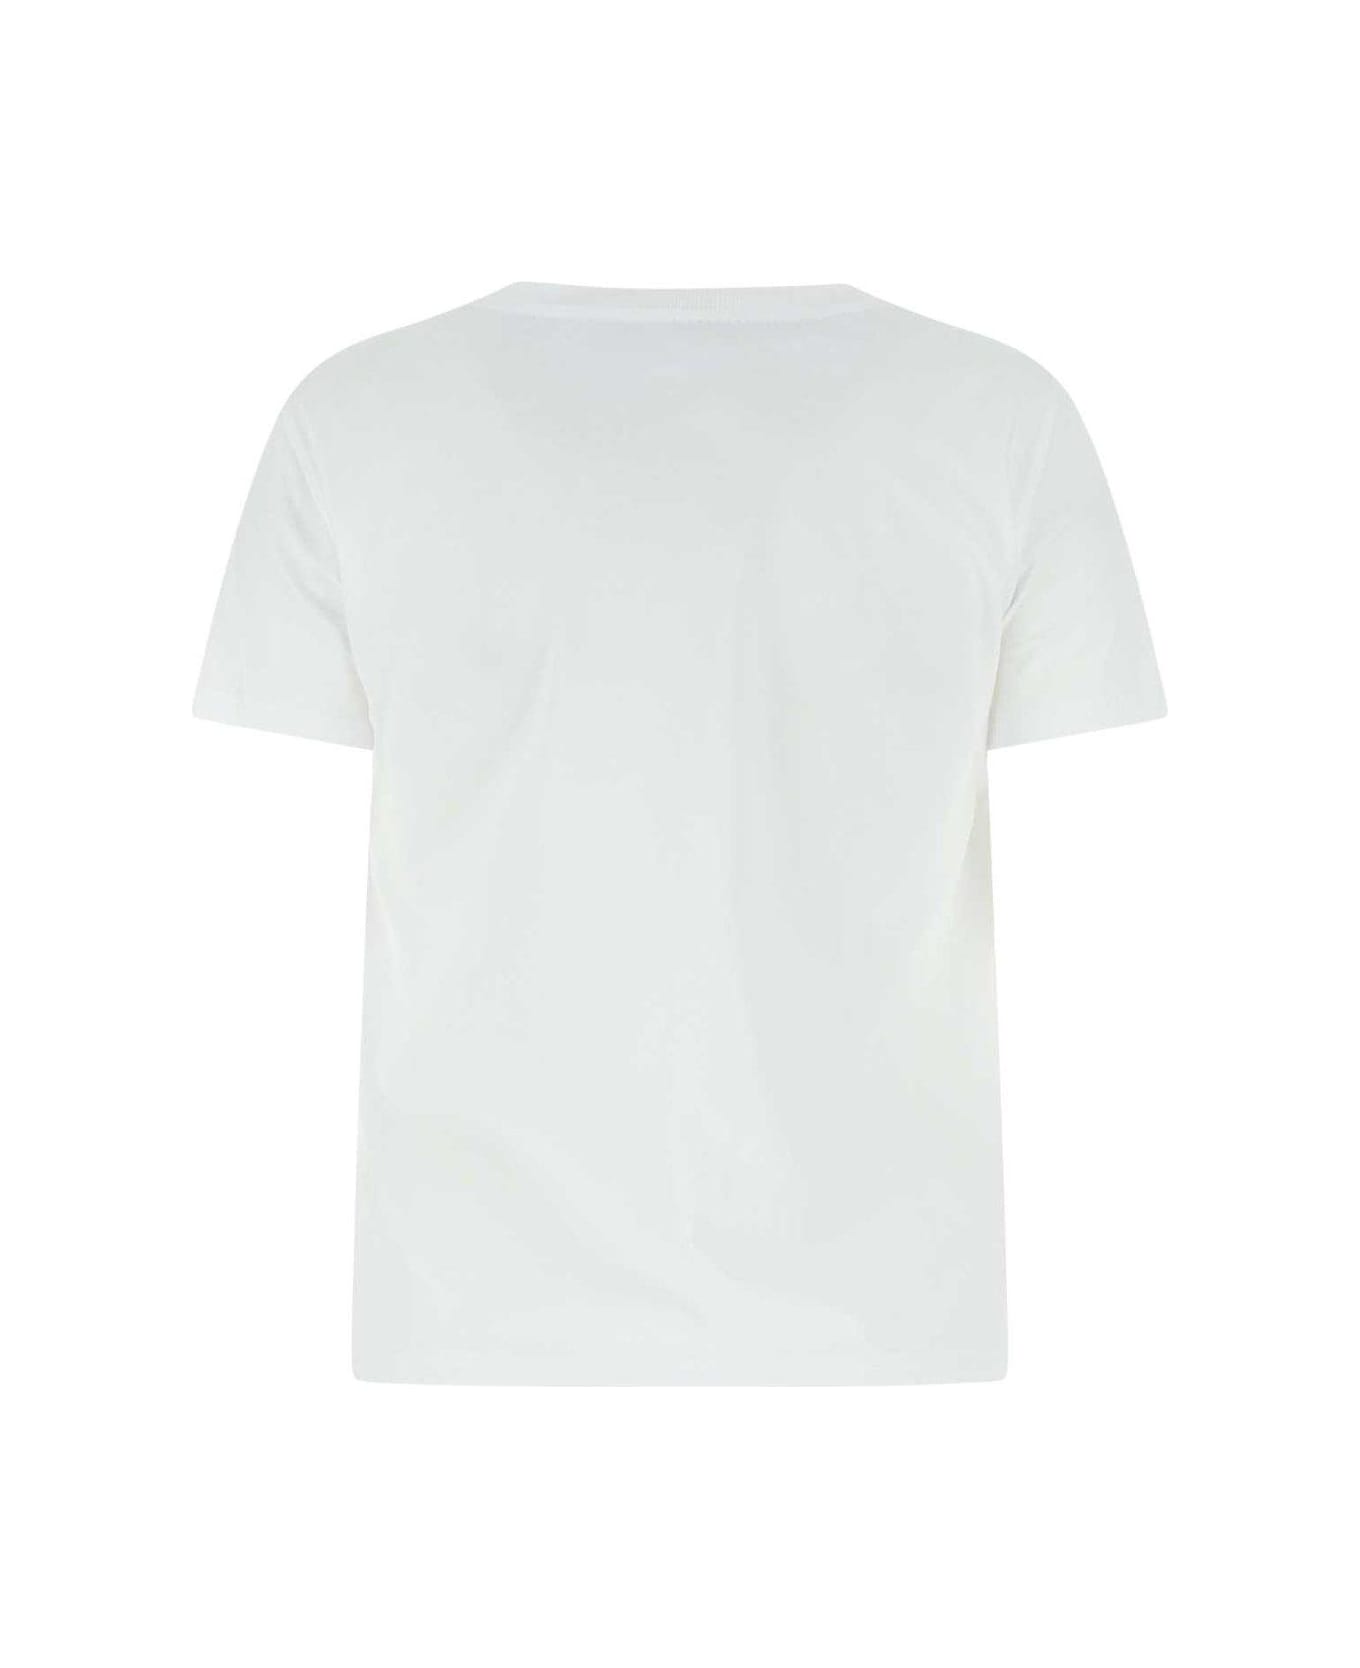 Moschino Logo-detailed Crewneck T-shirt Moschino - WHITE Tシャツ